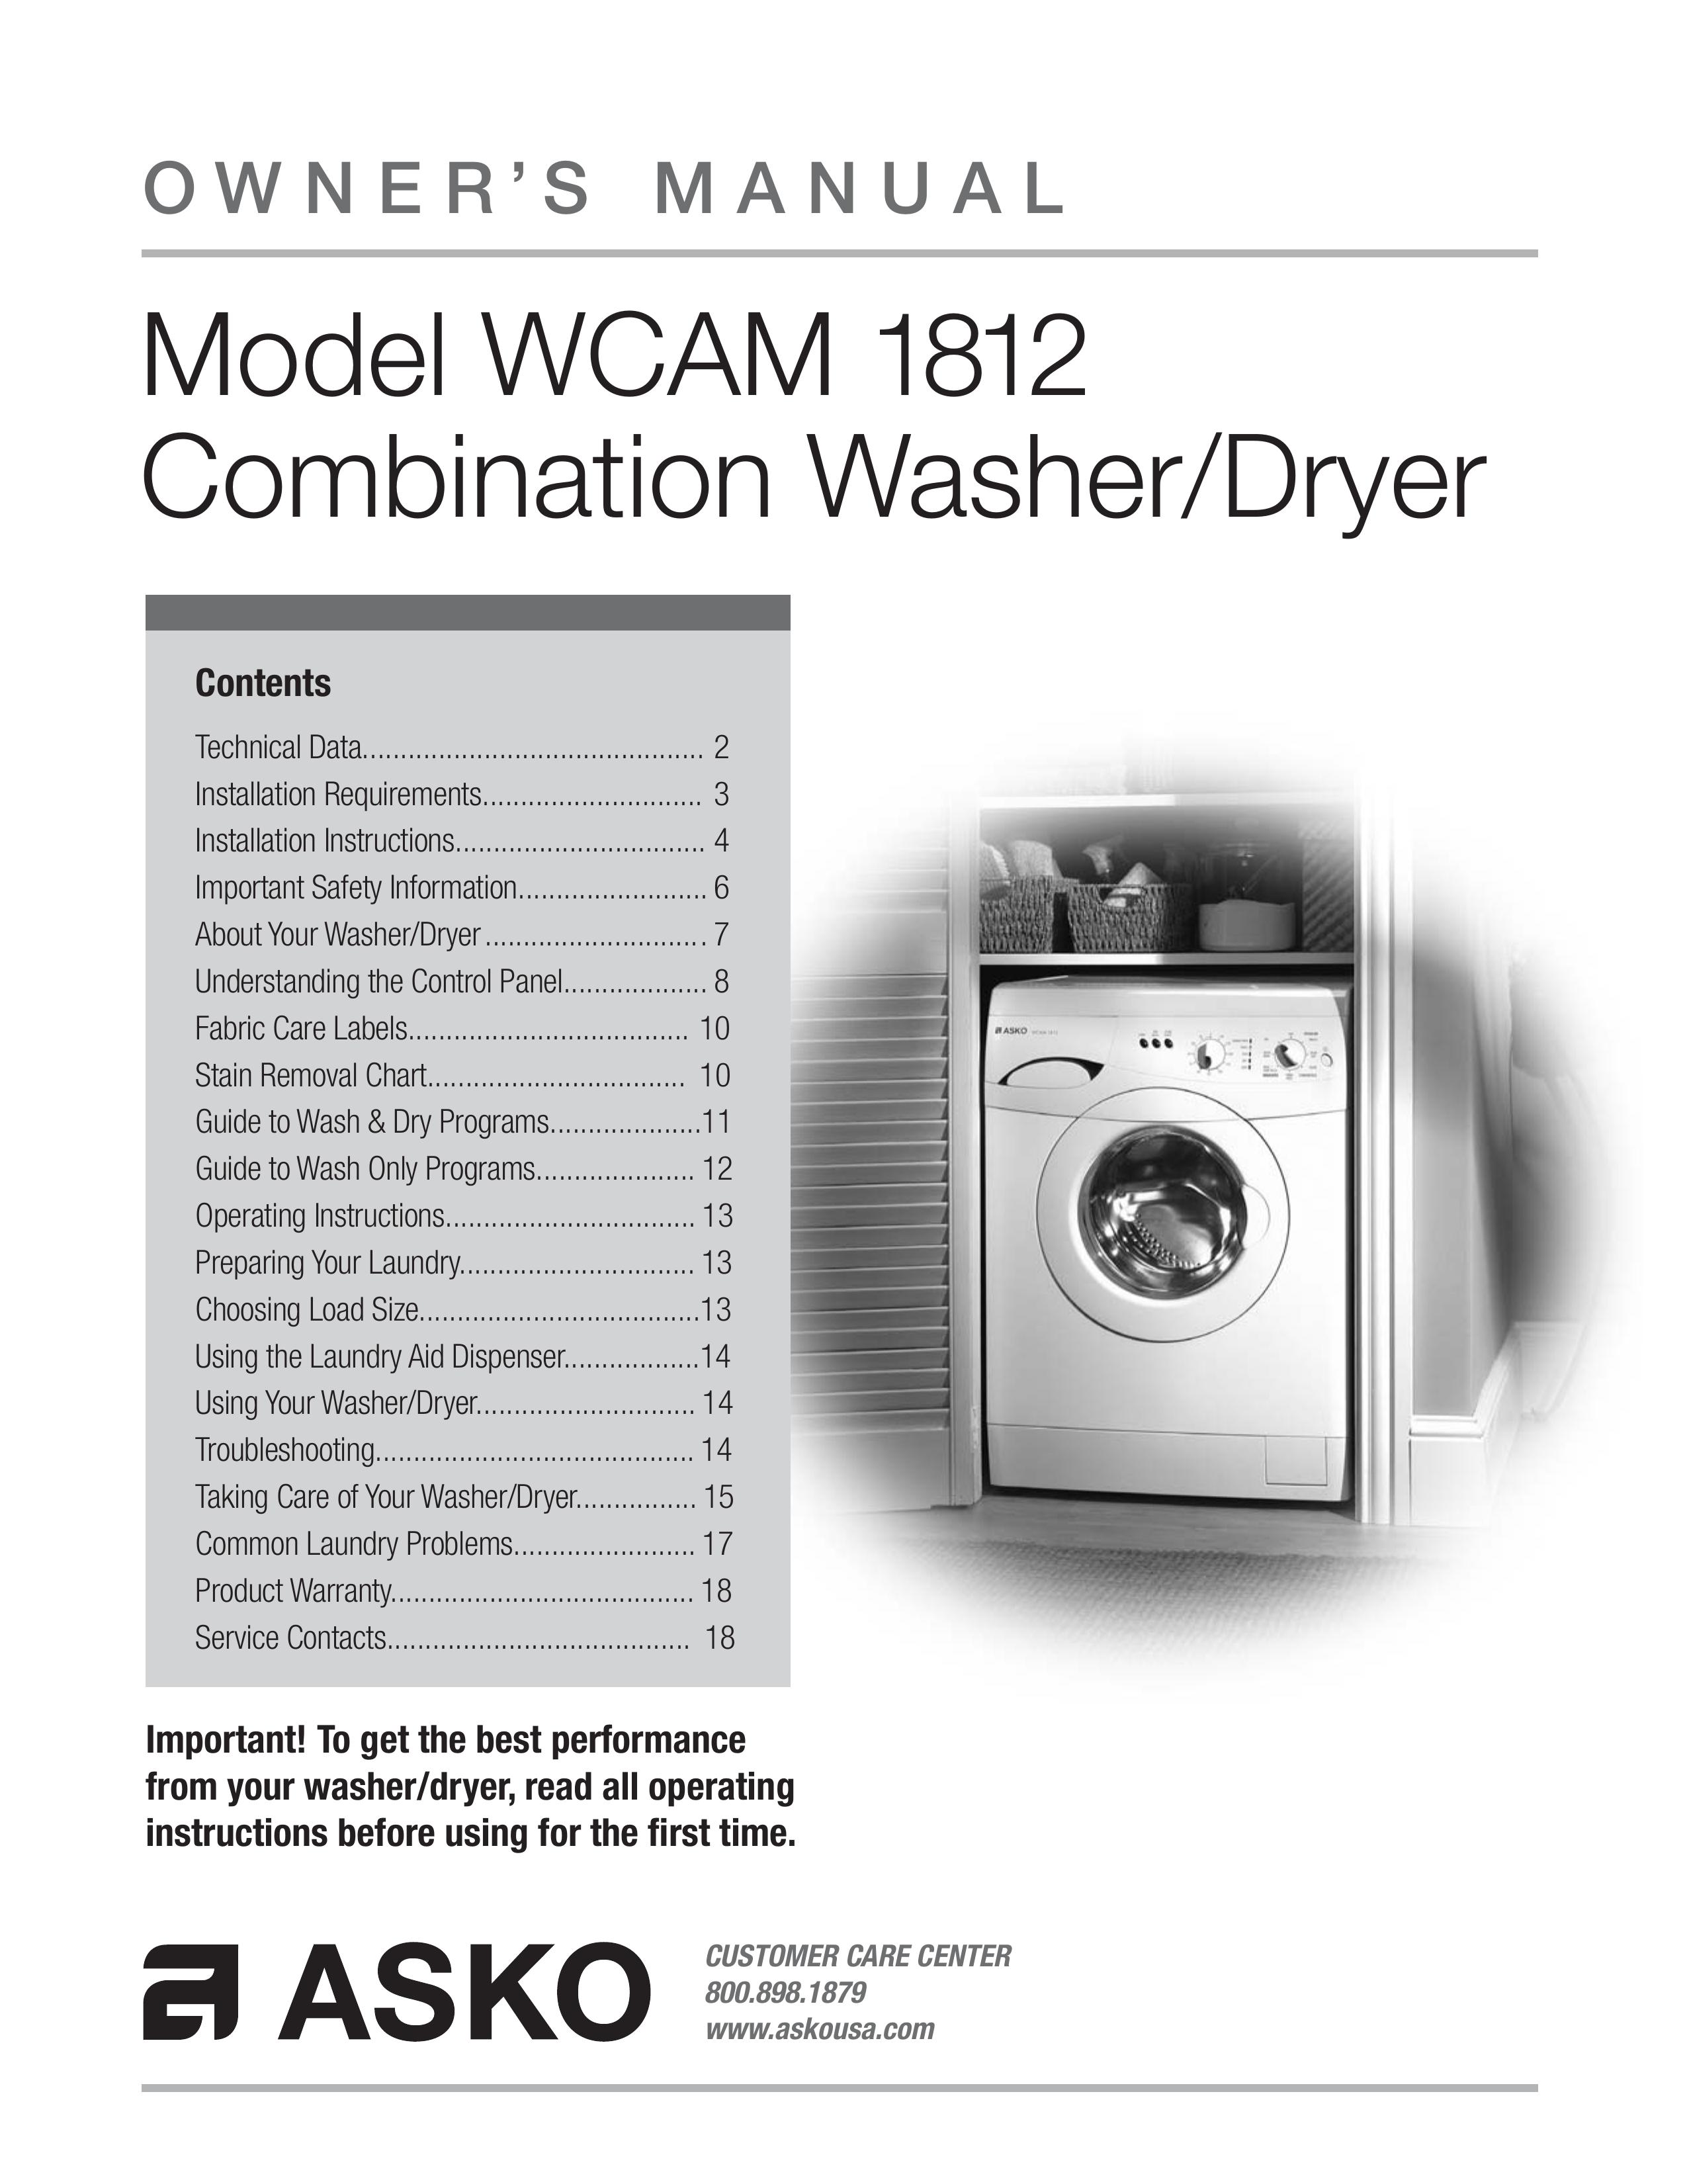 Asko WCAM 1812 Washer/Dryer User Manual